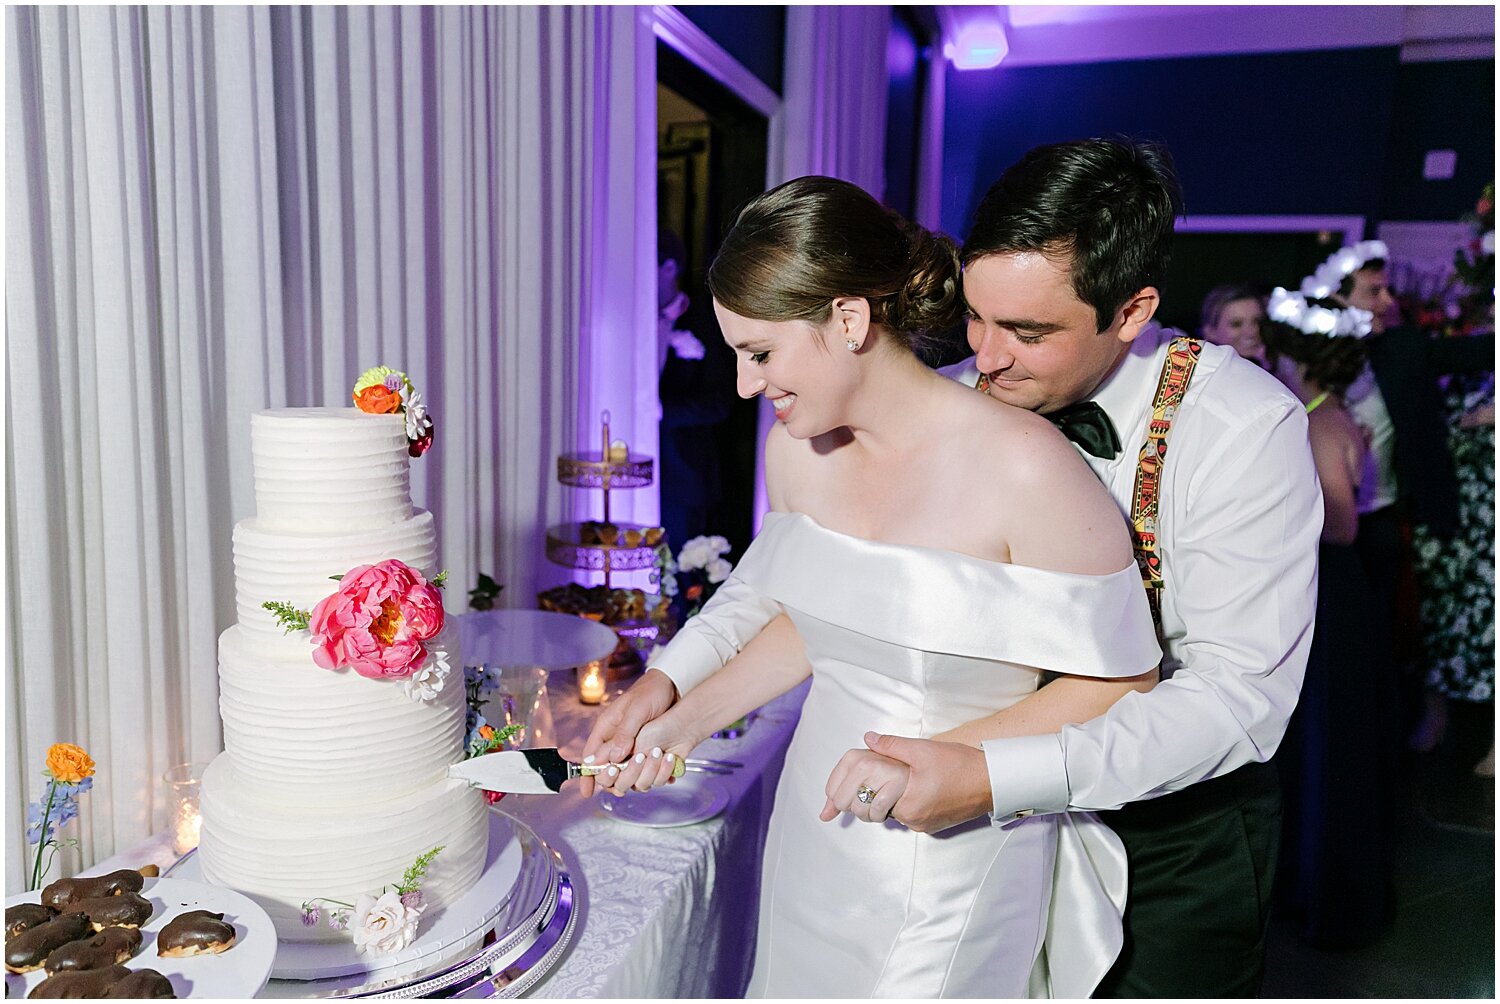  bride and groom cut their wedding cake 